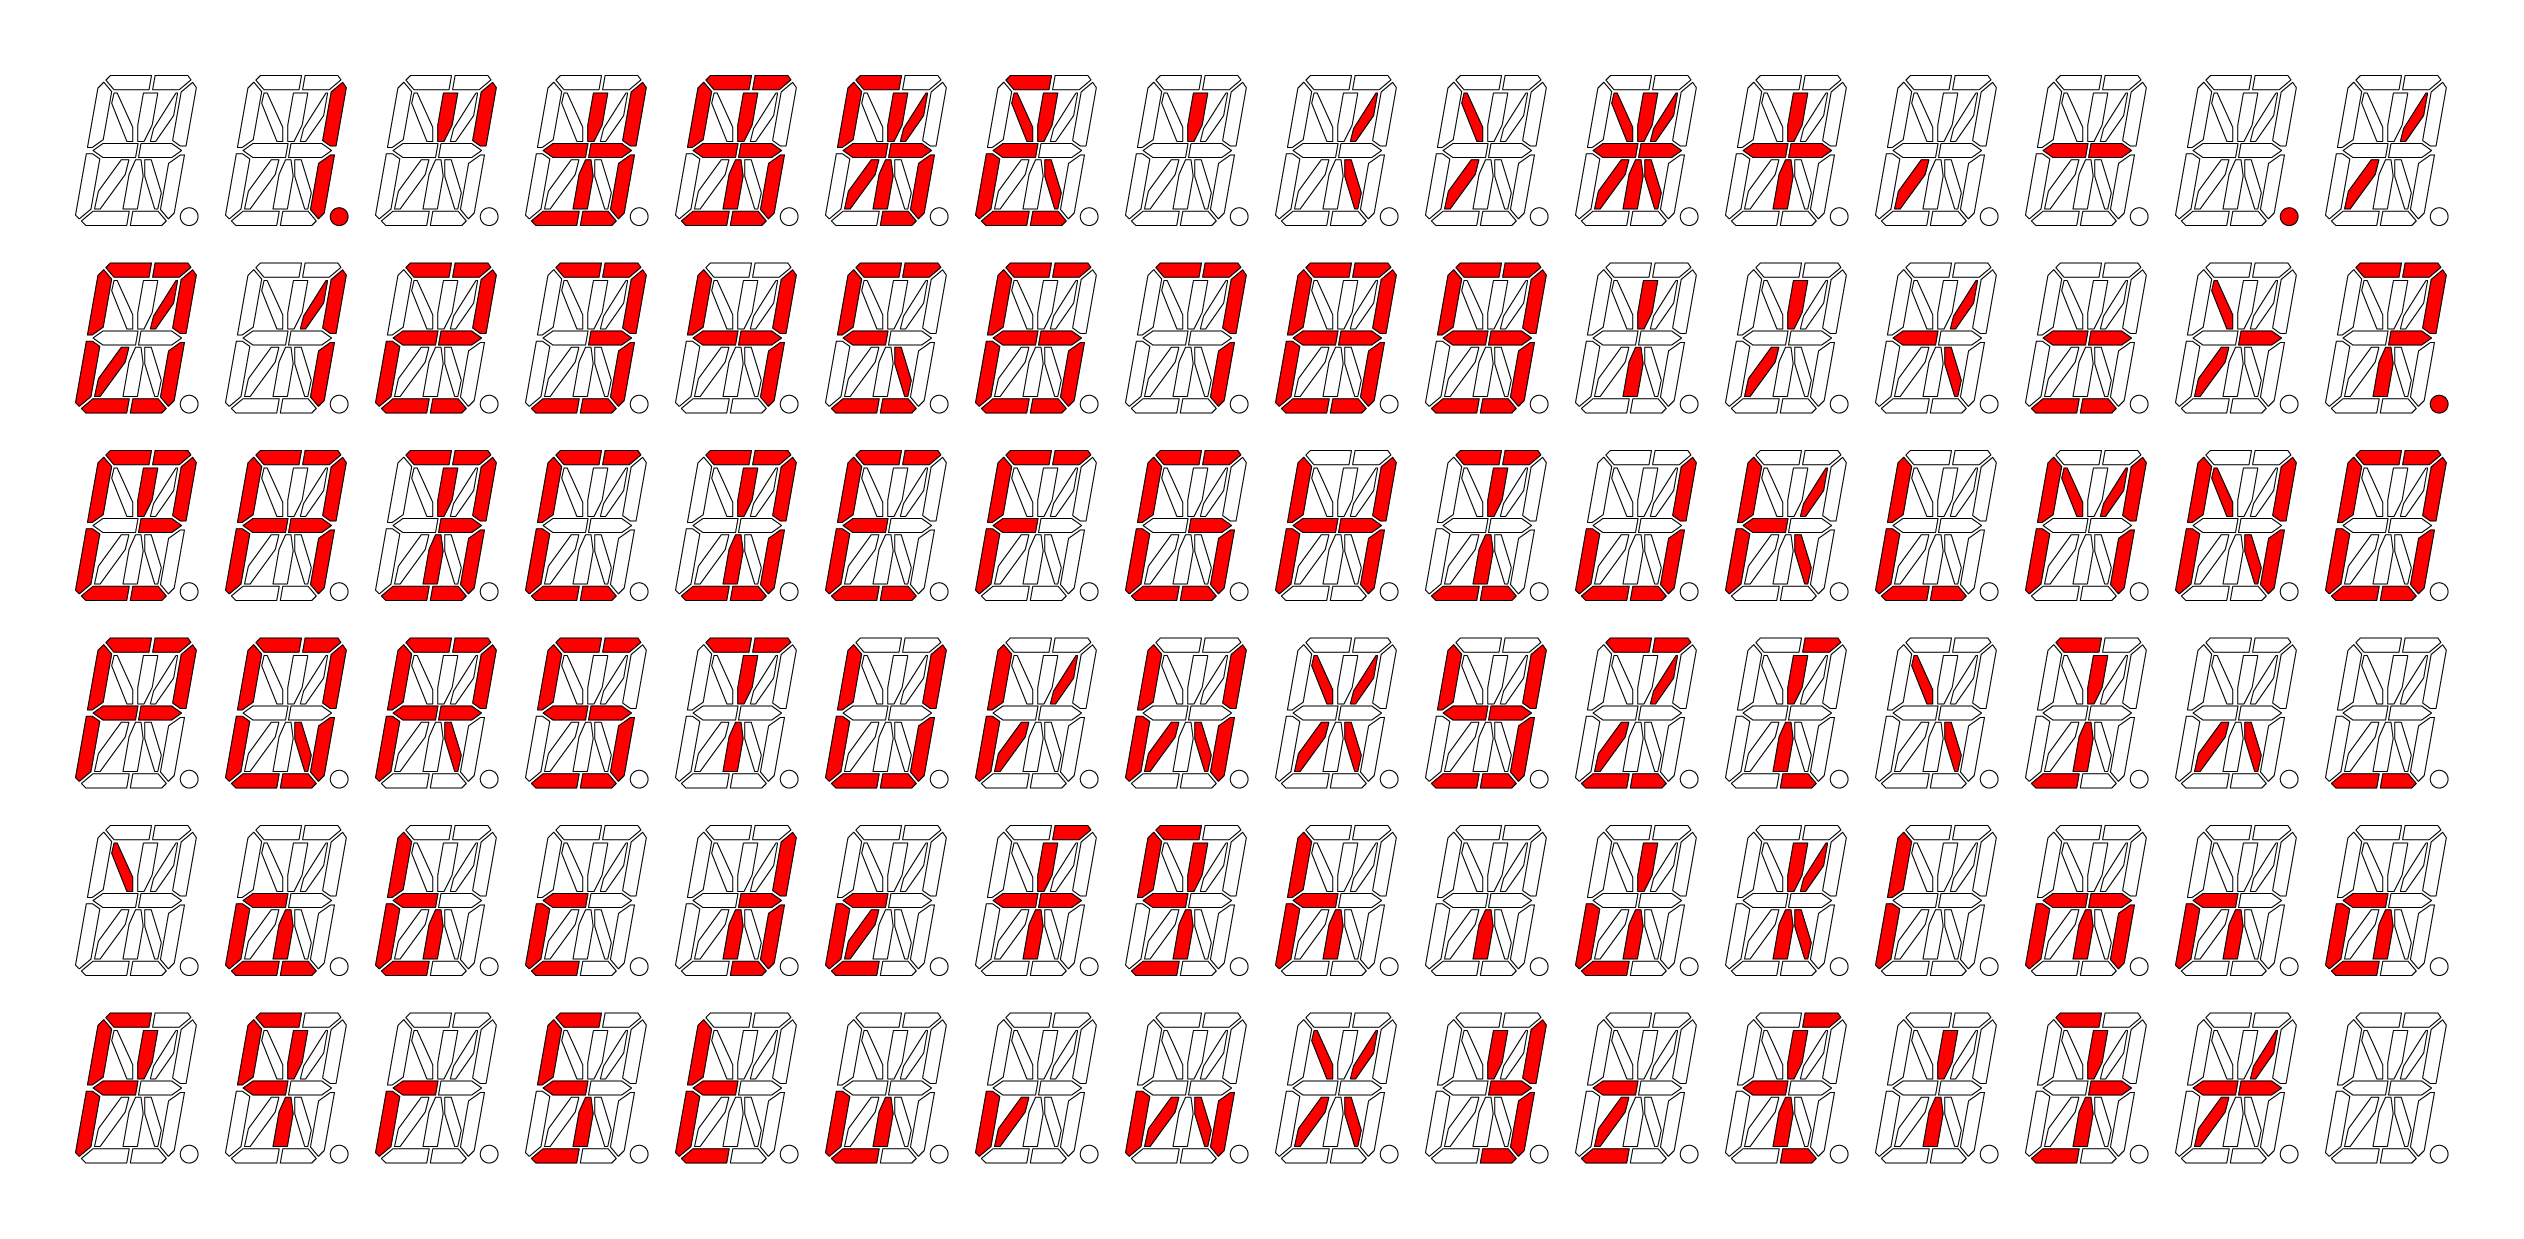 16-segment ASCII chars (all)